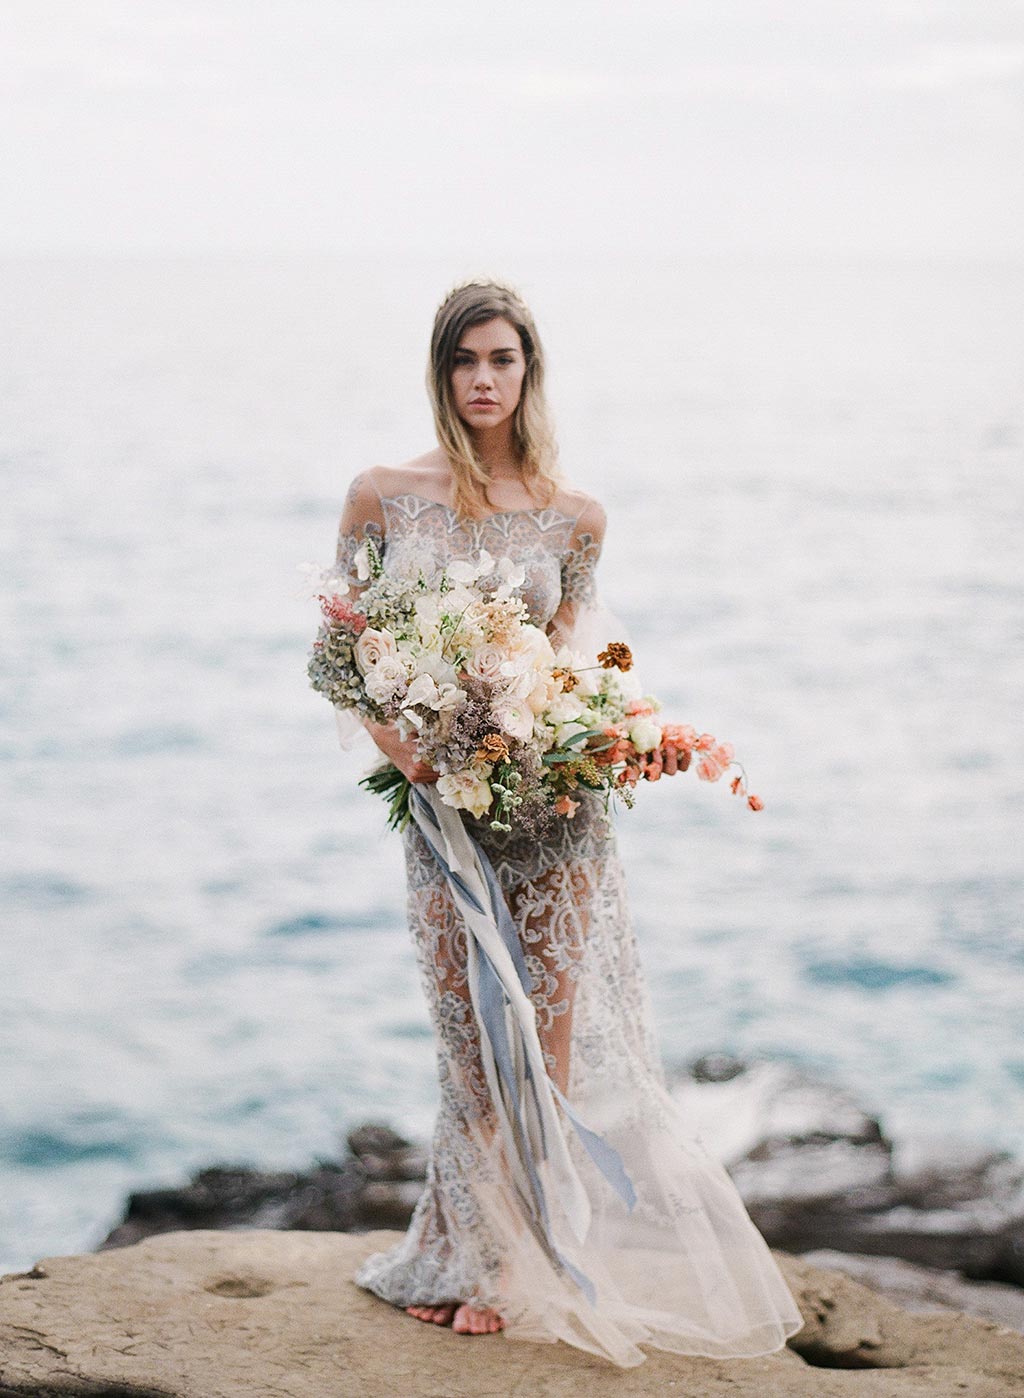 Wedding dress model with Ocean background